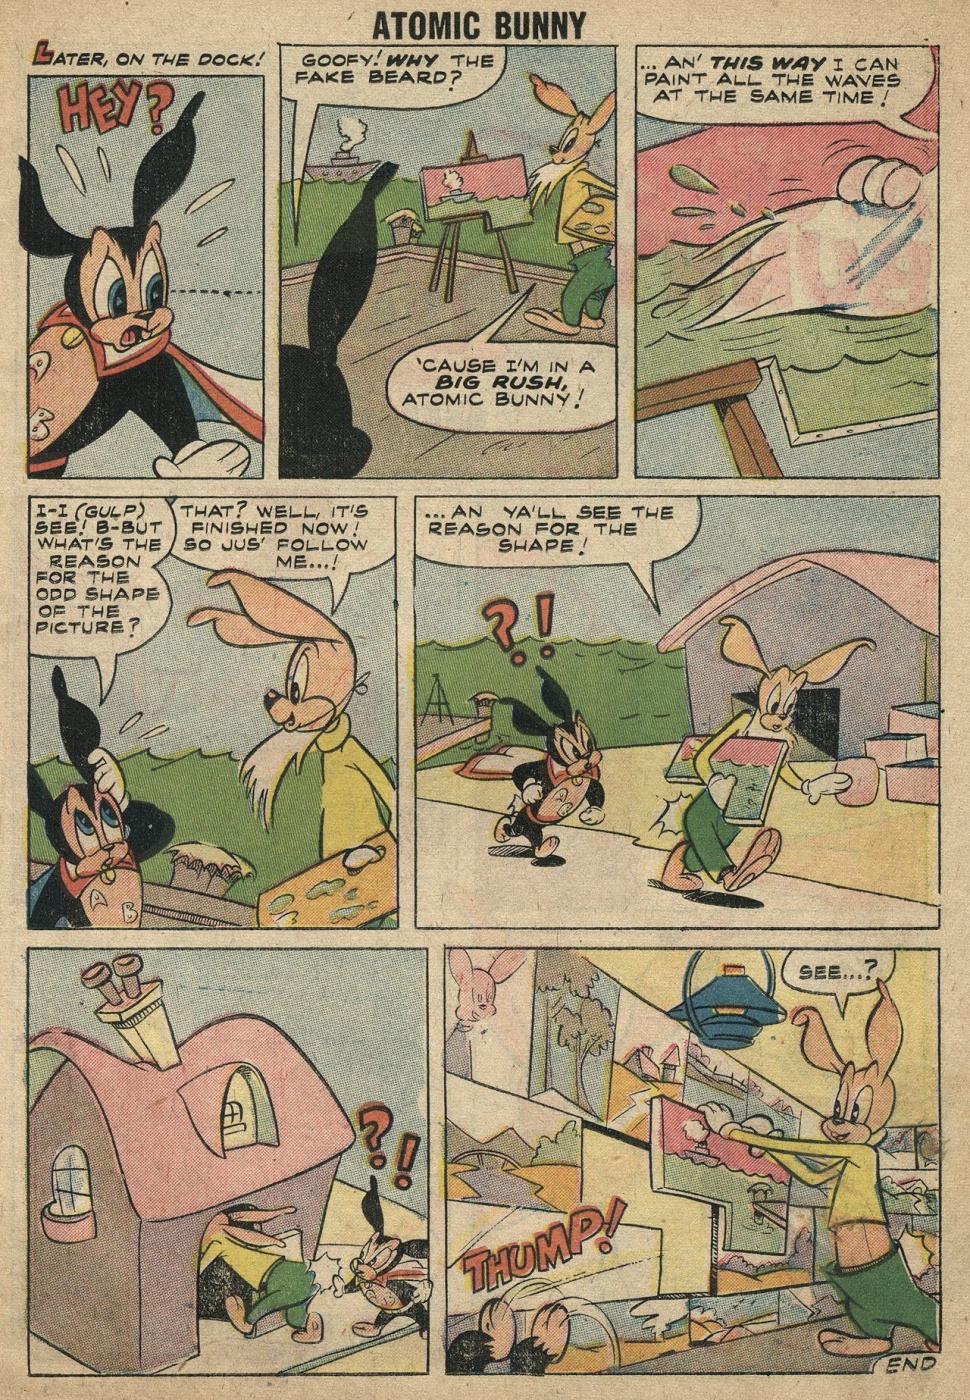 Atomic-Bunny-Comic-Strips (11)